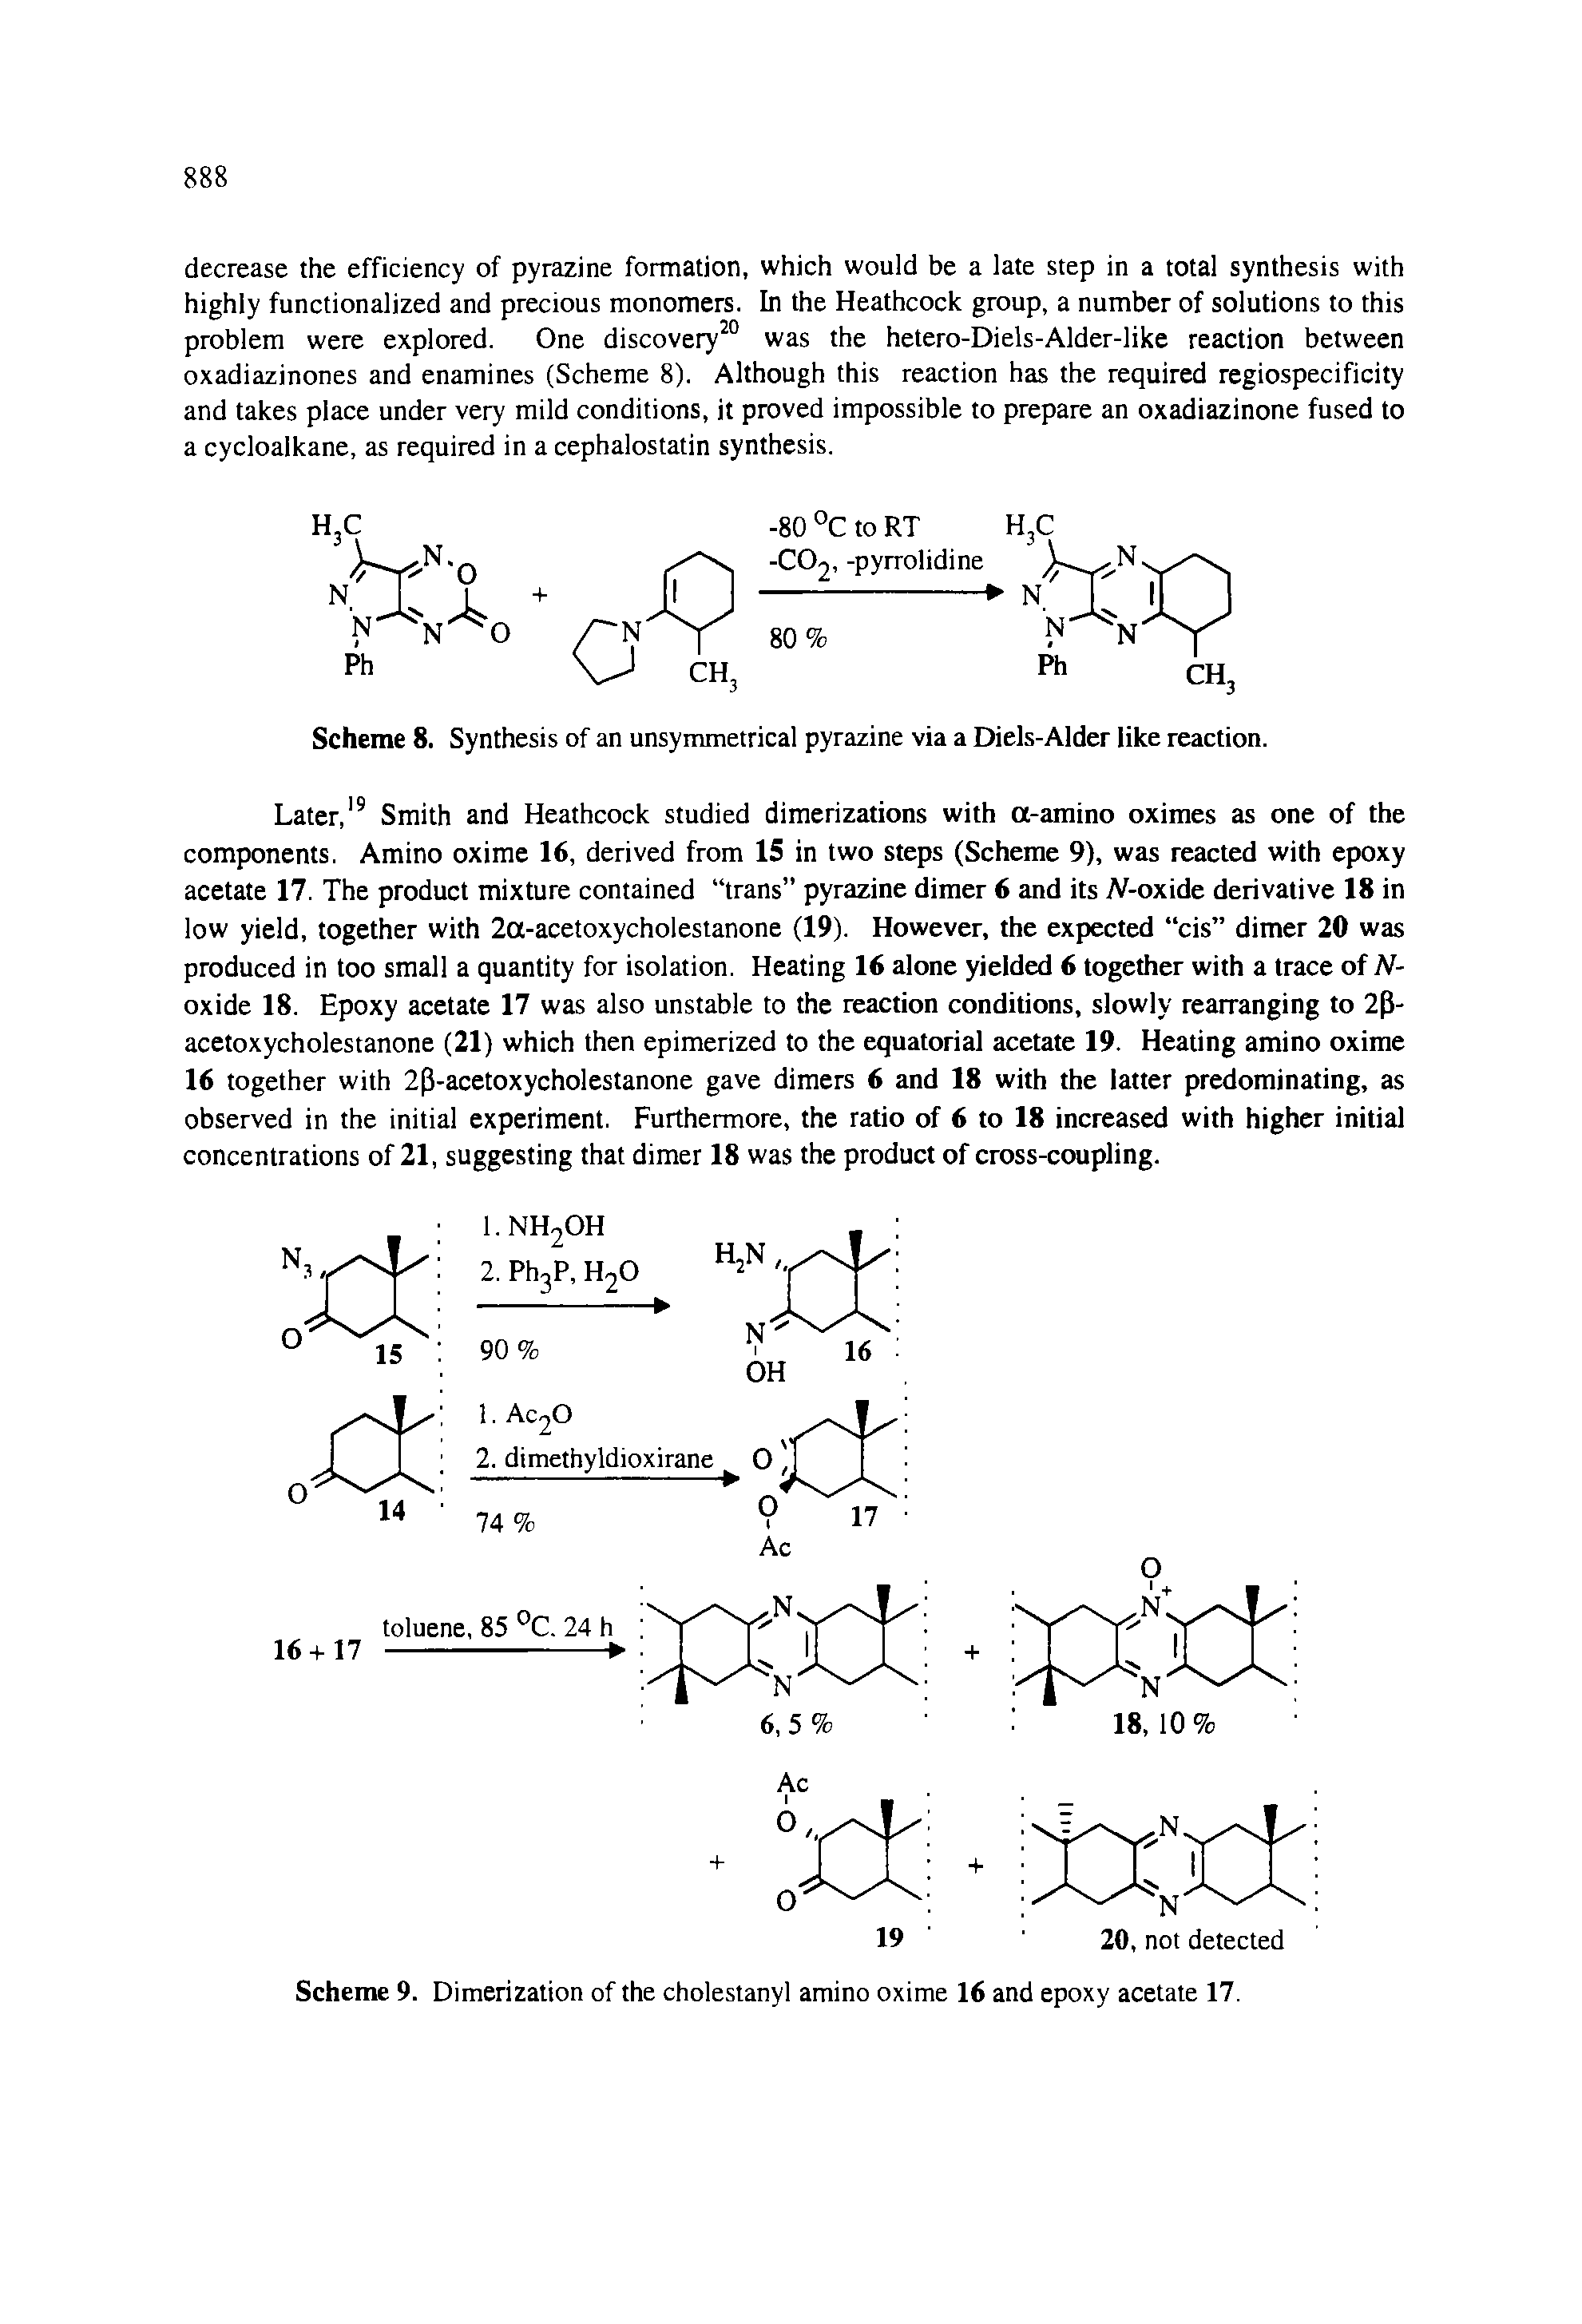 Scheme 8. Synthesis of an unsymmetrical pyrazine via a Diels-Alder like reaction.